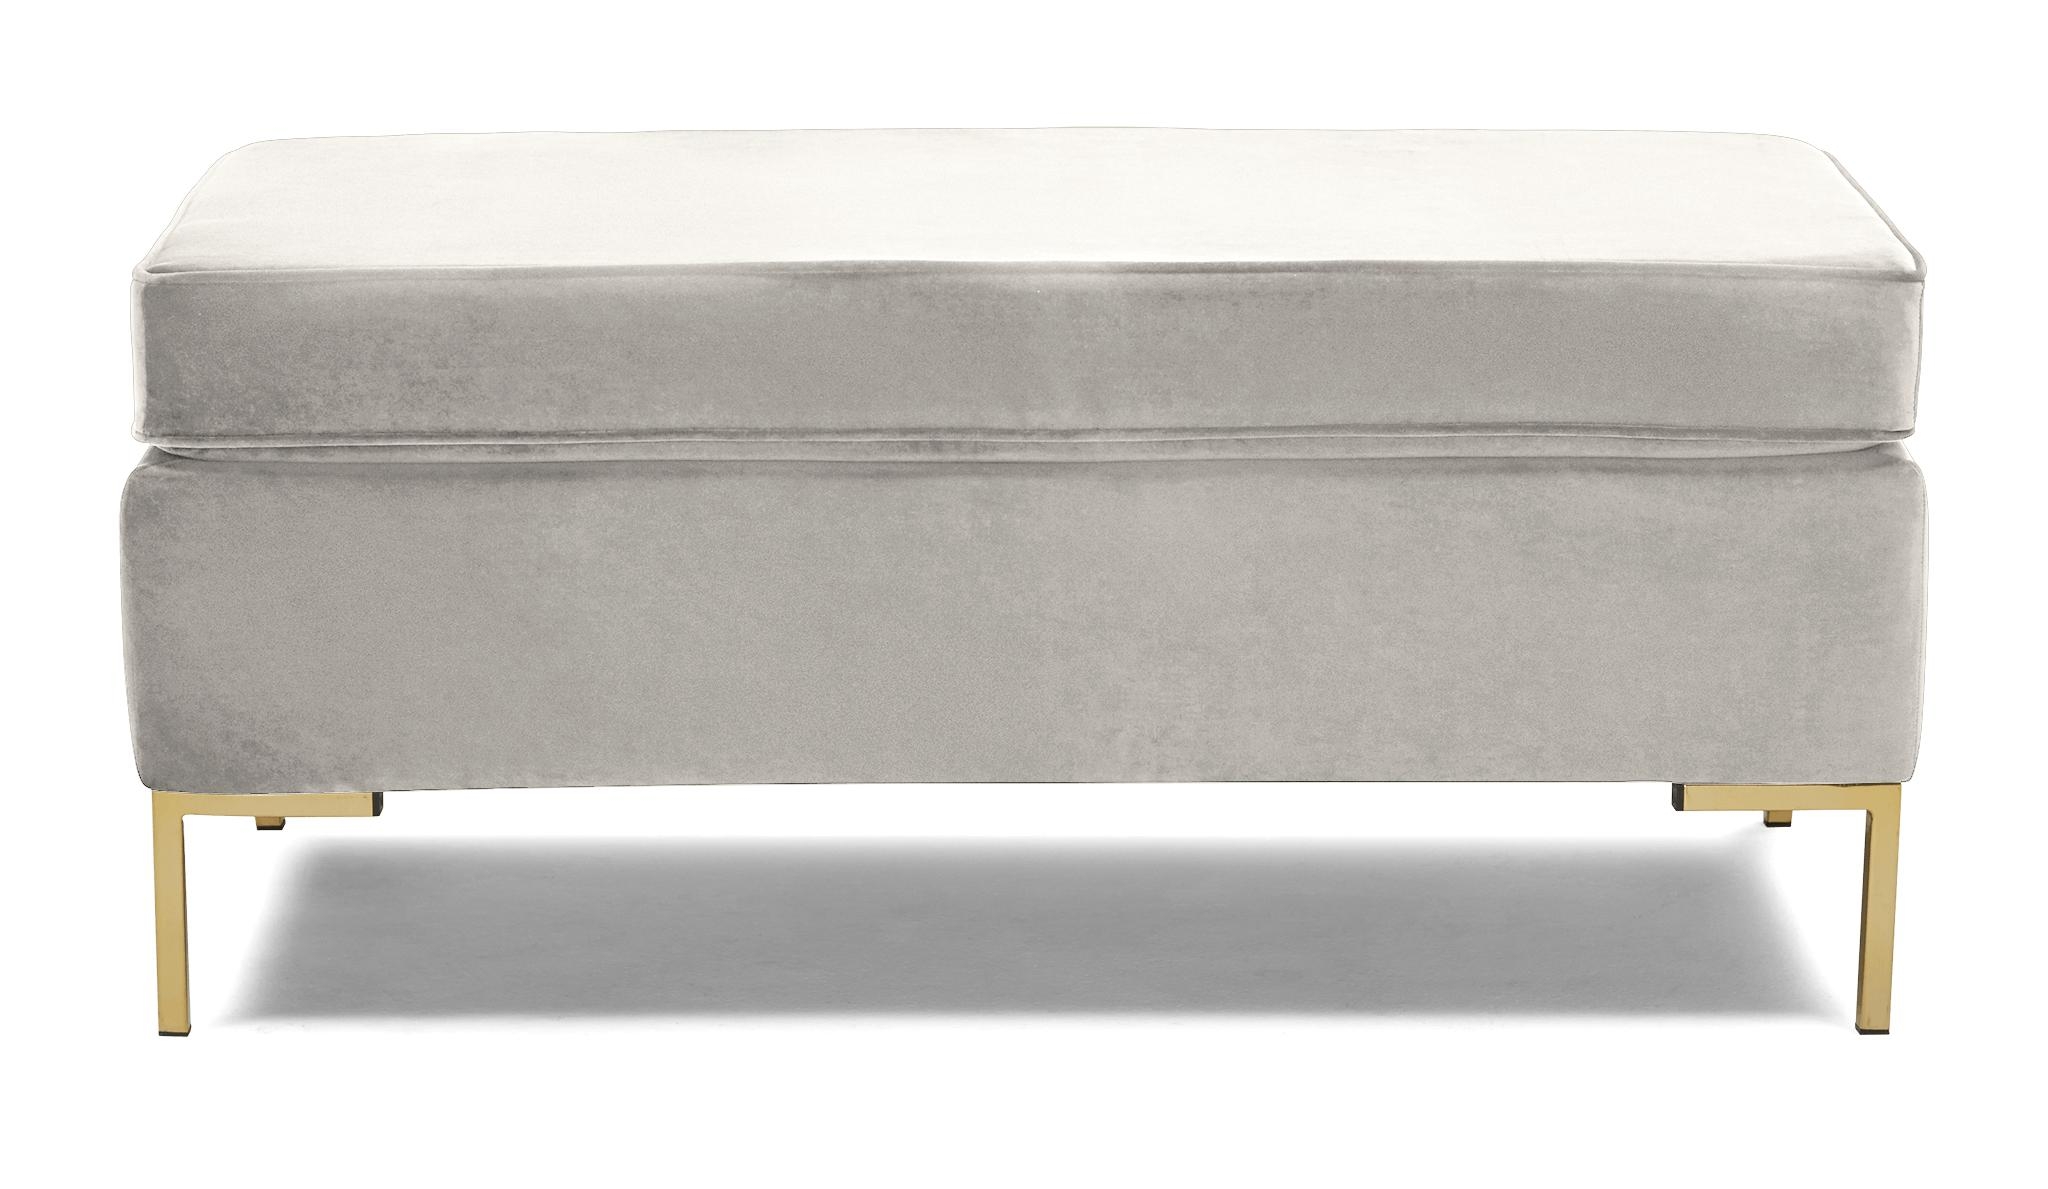 White Dee Mid Century Modern Bench with Storage - Tussah Snow - Image 0